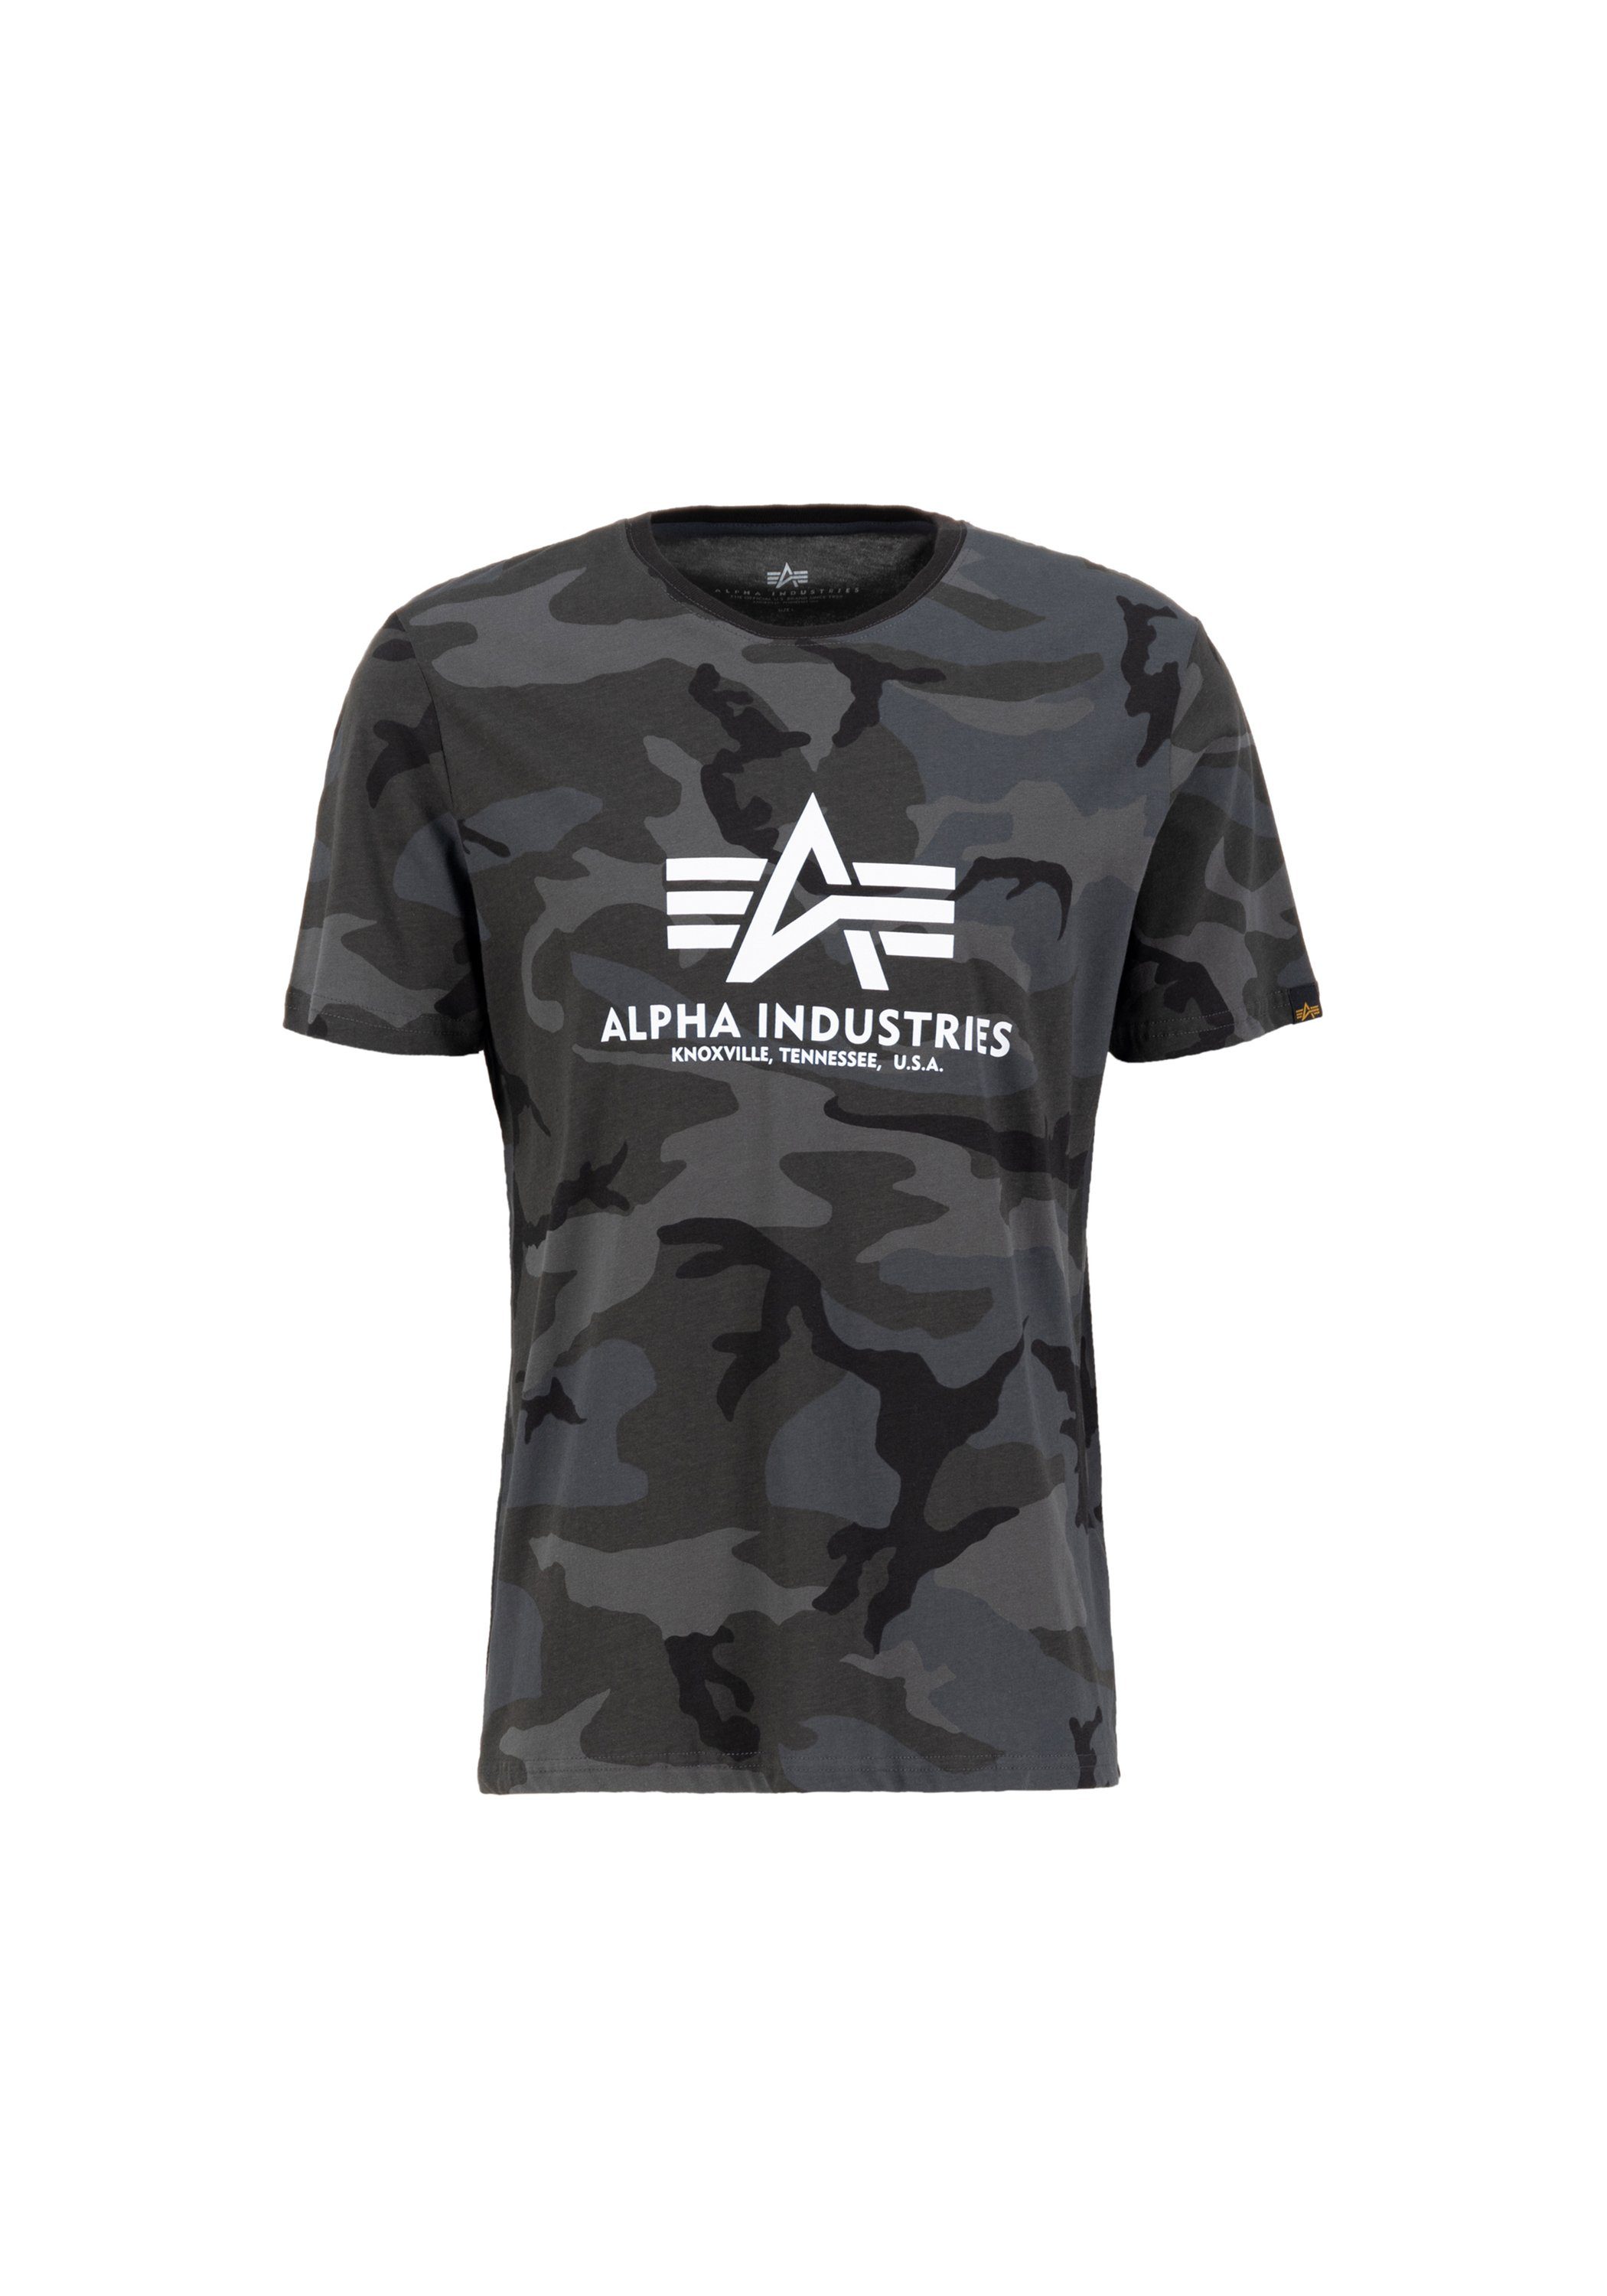 Alpha Industries T-shirt Men T-Shirts Basic T-Shirt B&T Camo